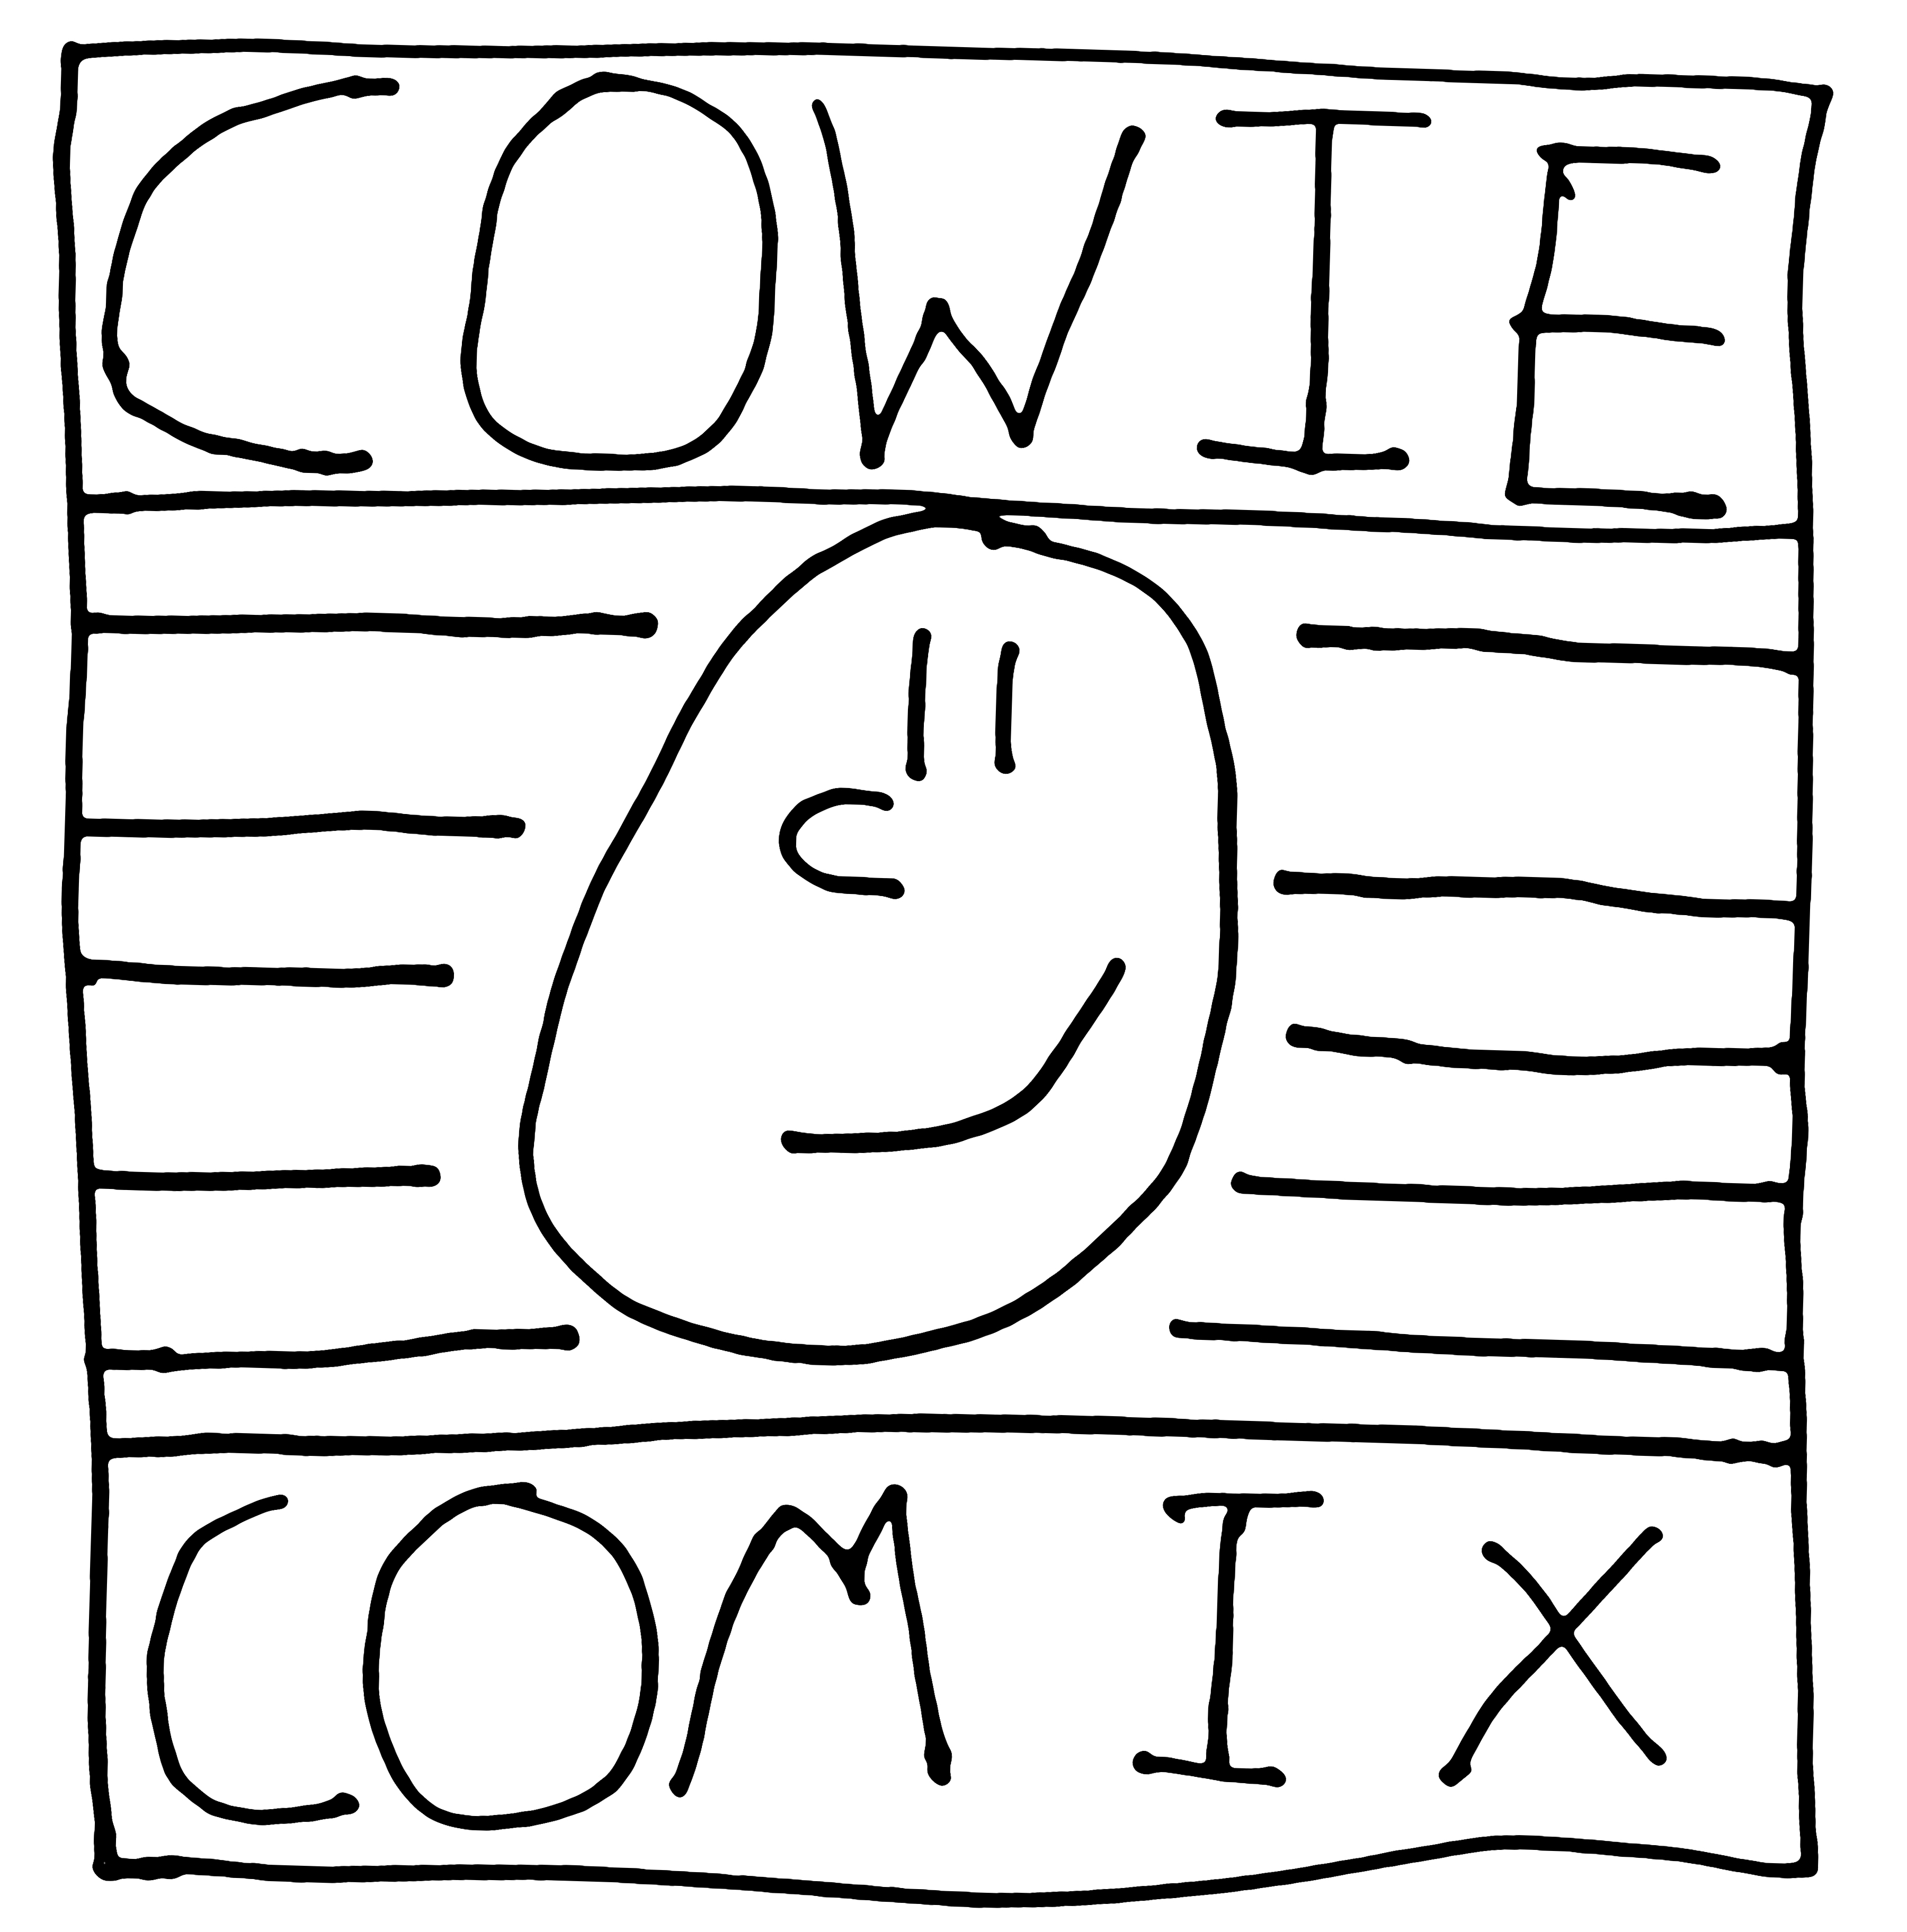 Cowie Comix Logo